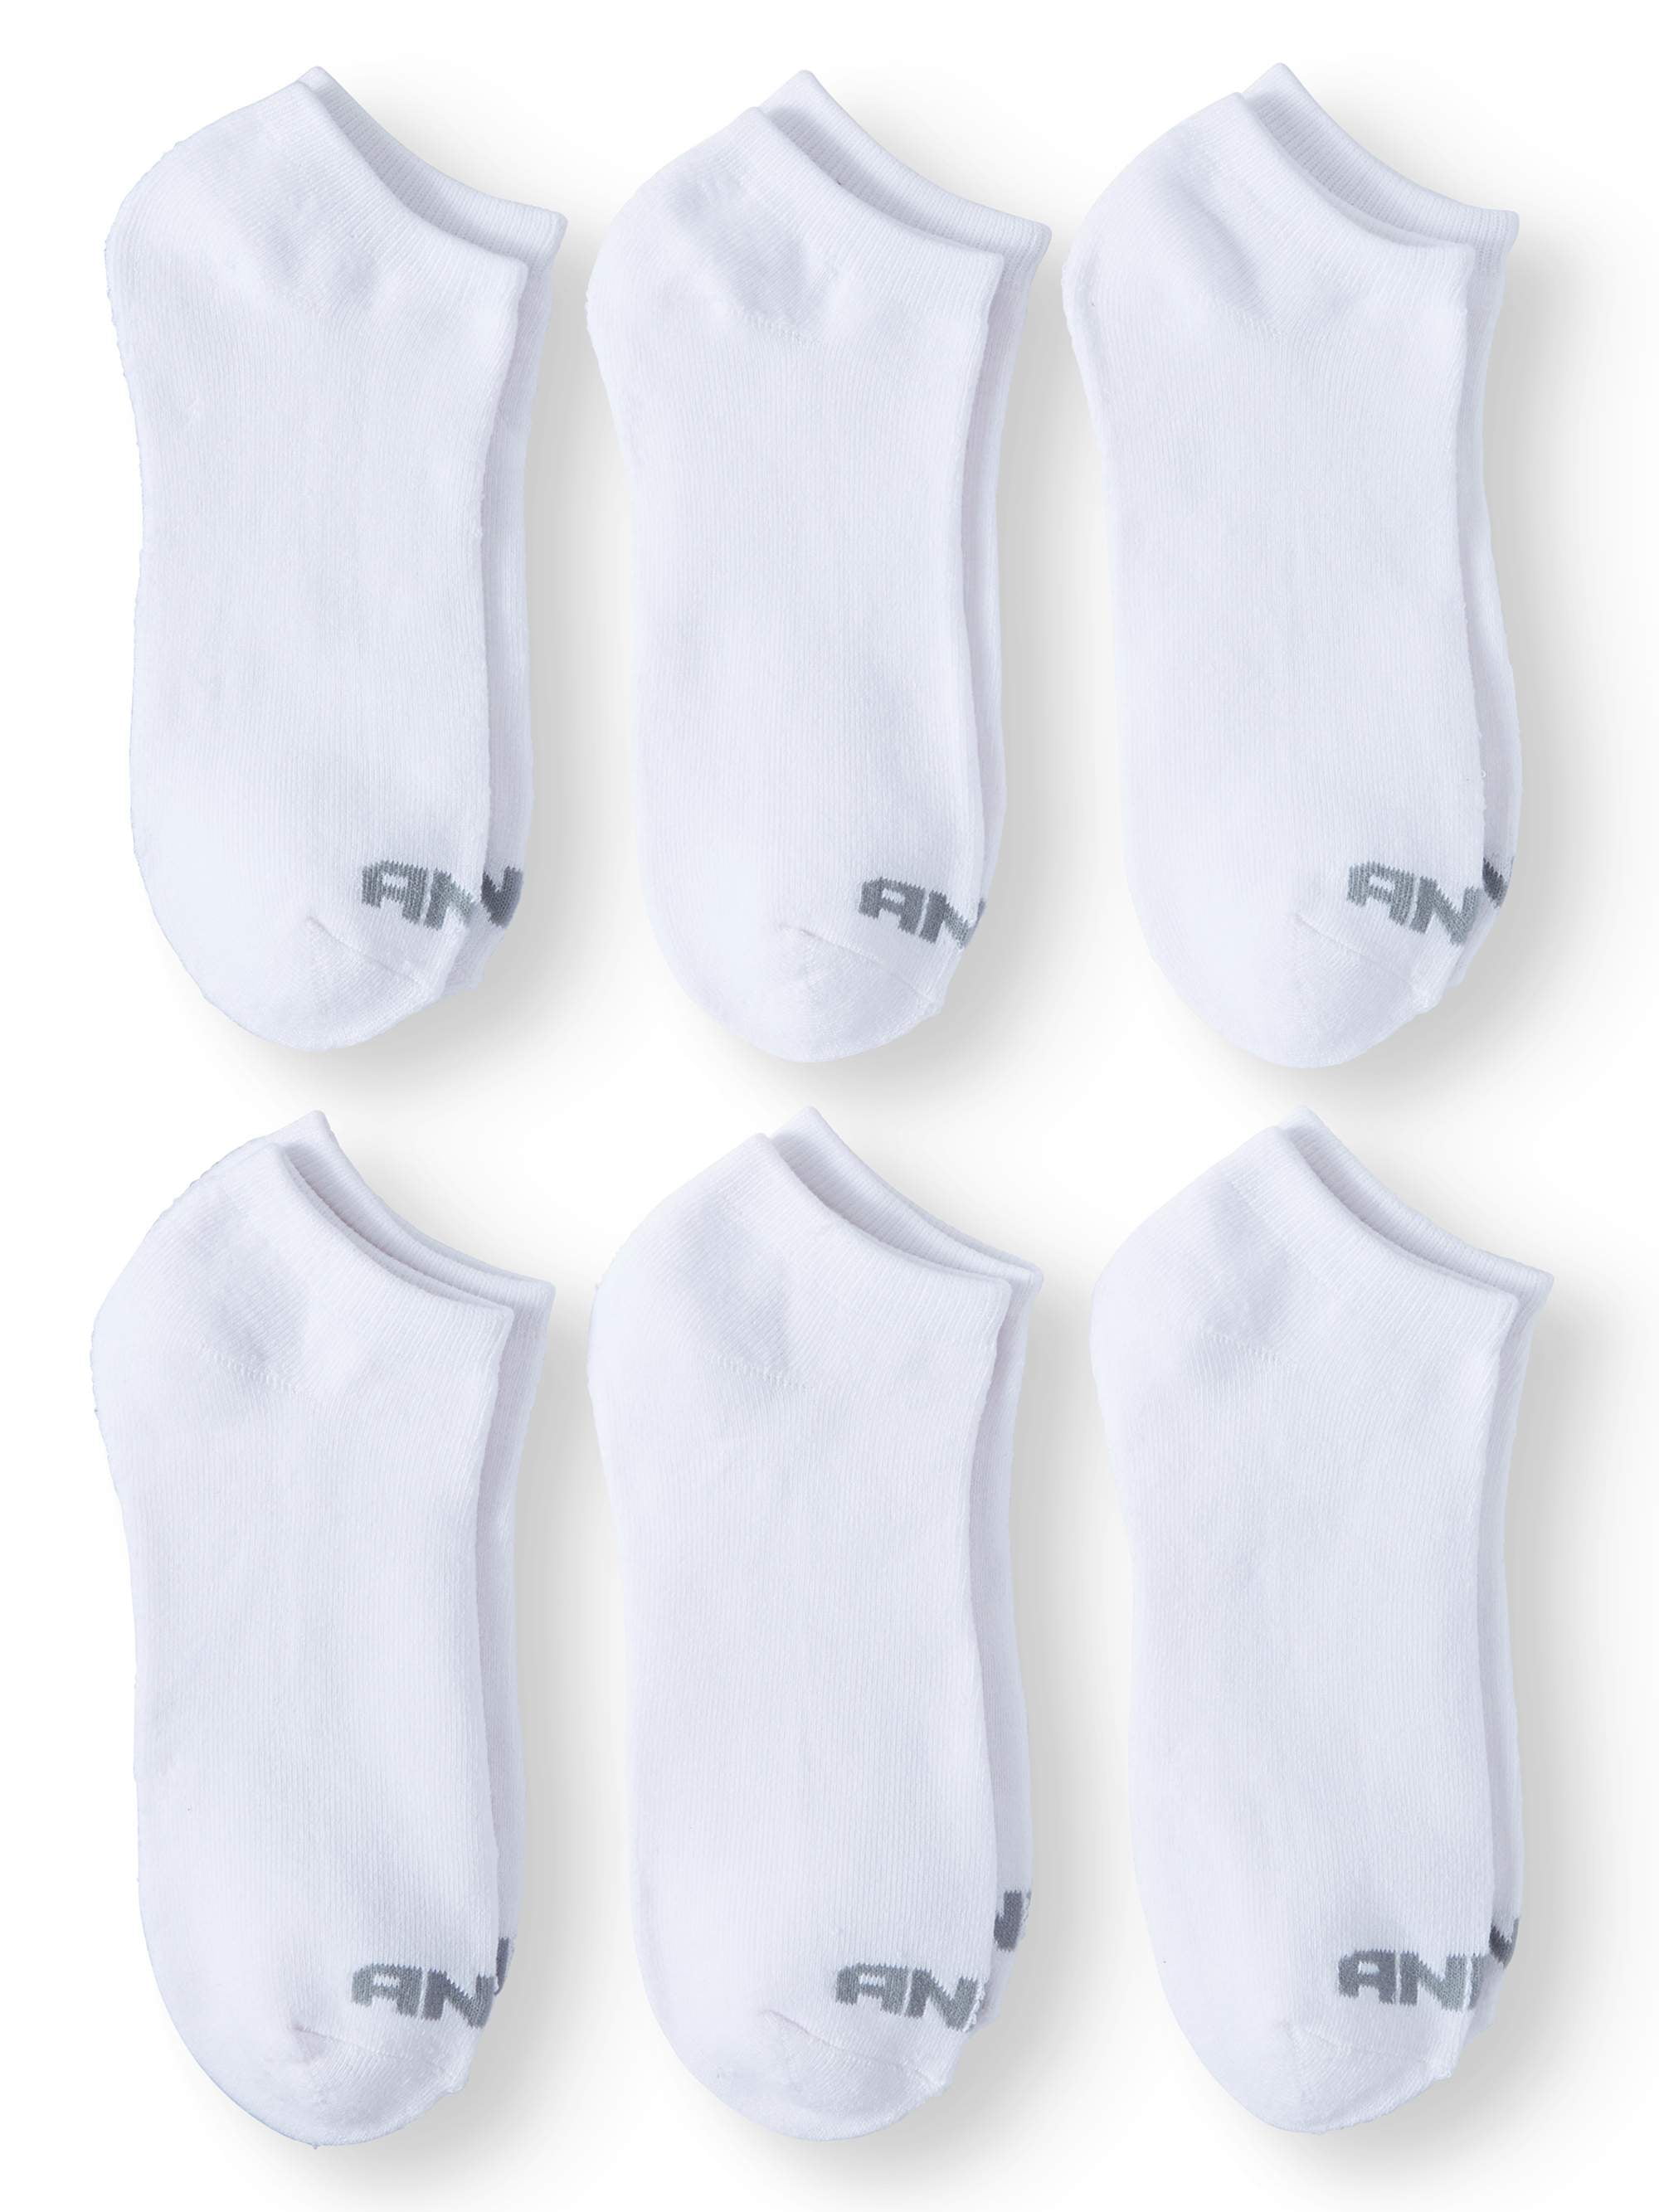 AND1 Men’s Full Cushion Low Cut Socks, 6 Pack - Walmart.com